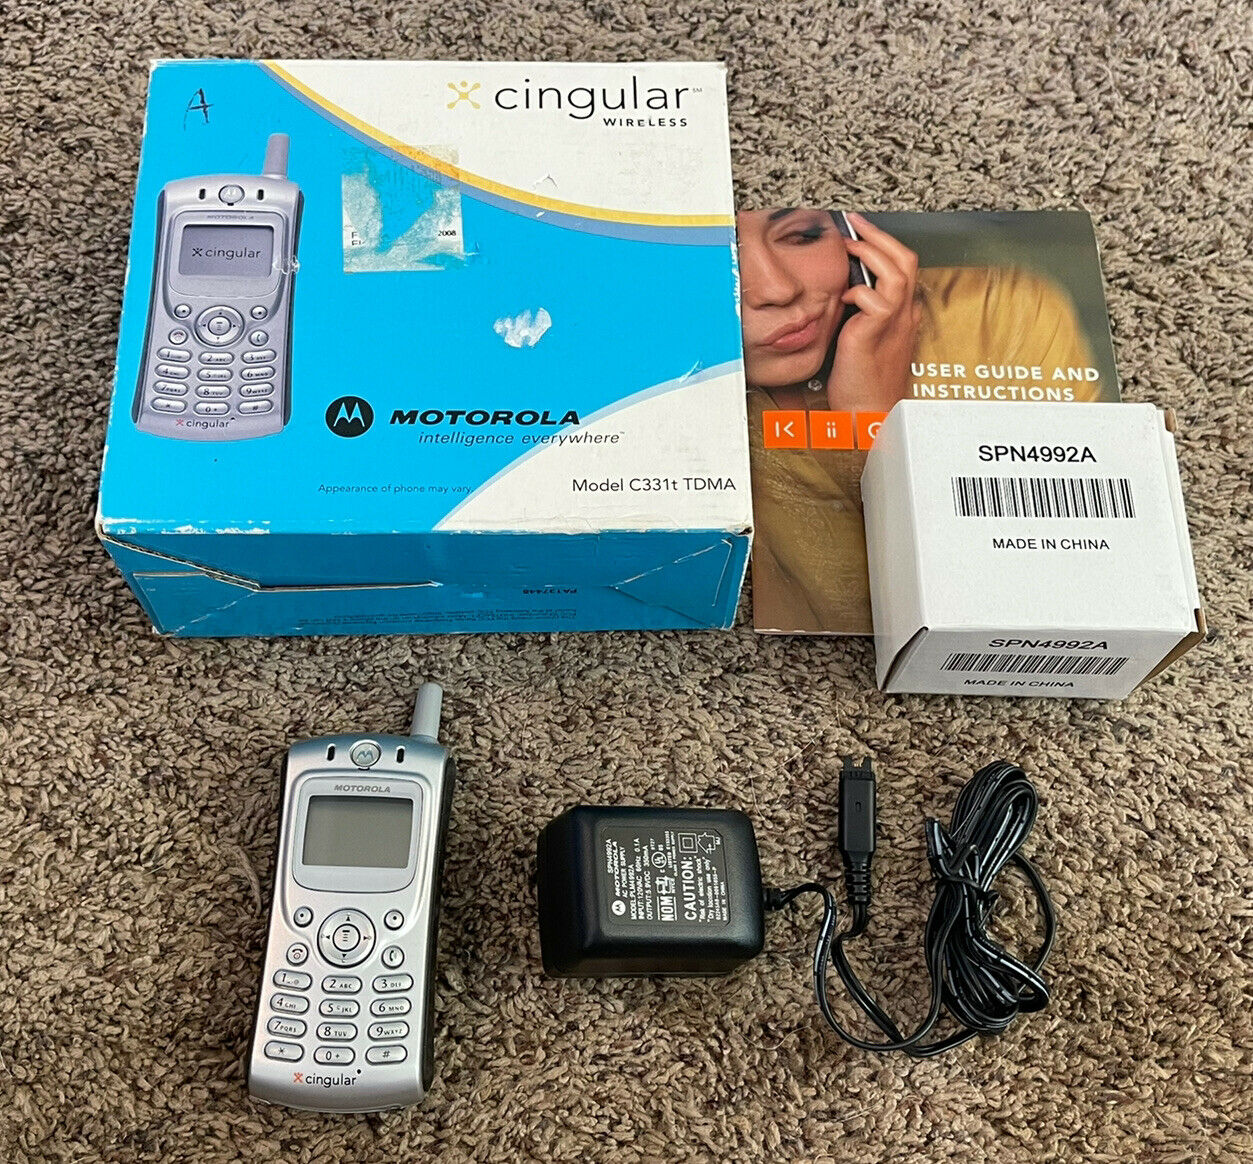 2002 Motorola Model C331t Cell Phone, Box, Manual, Charger